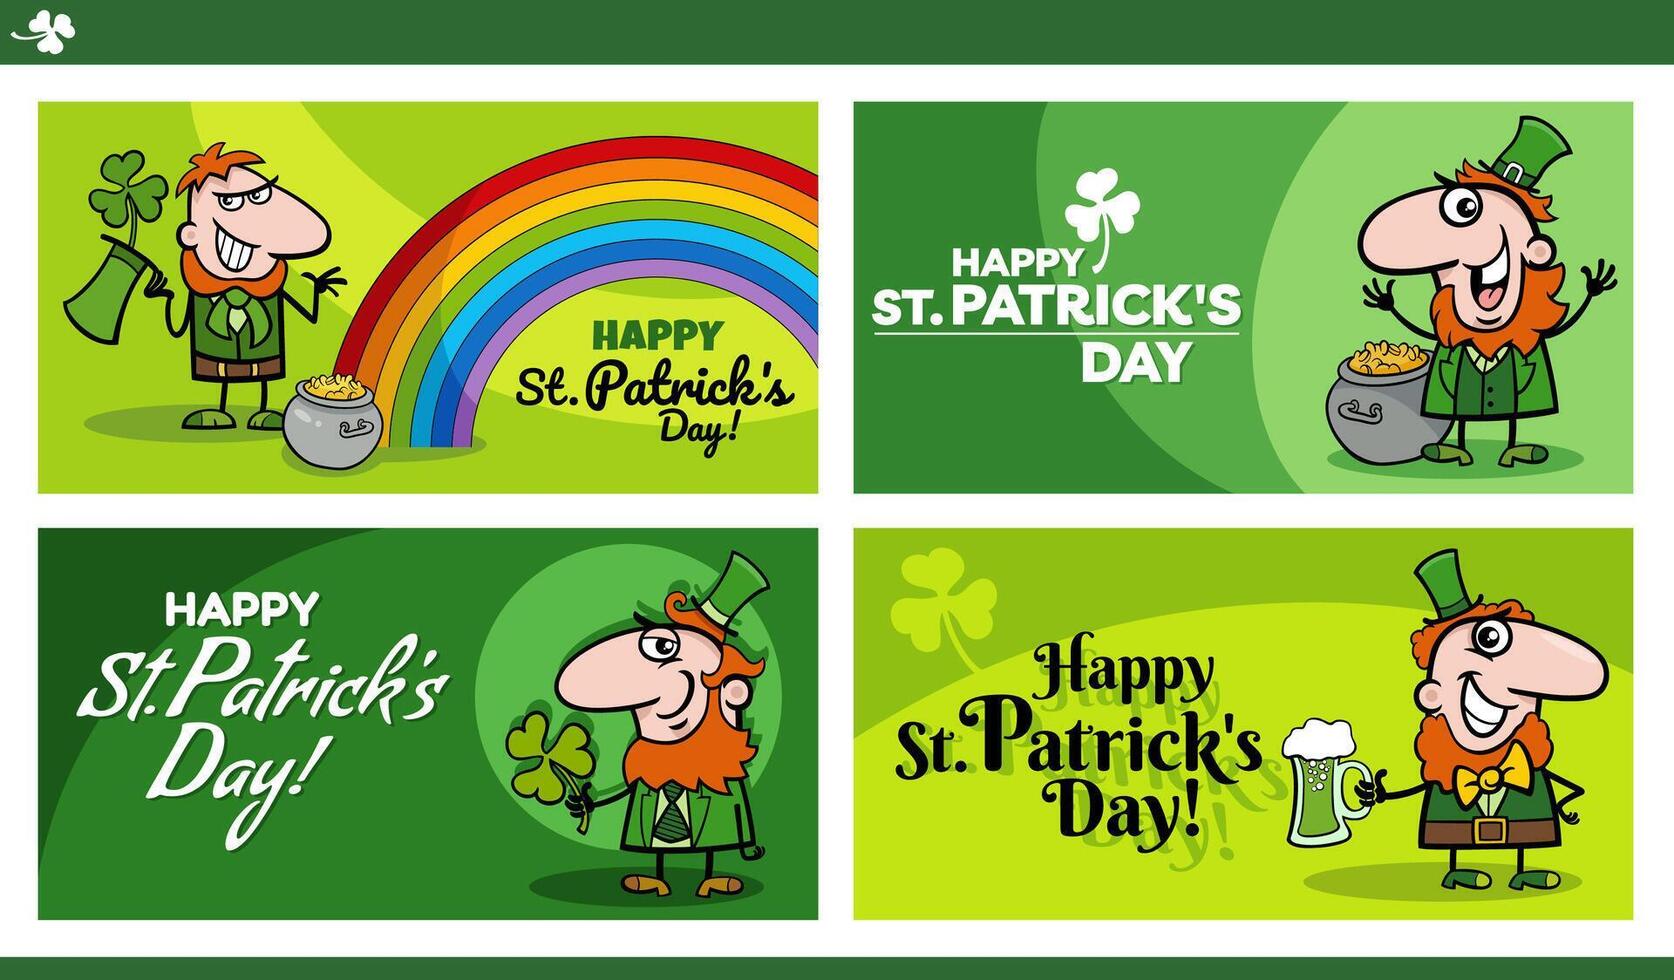 heilige Patrick dag ontwerpen reeks met tekenfilm elf van Ierse folklore karakter vector